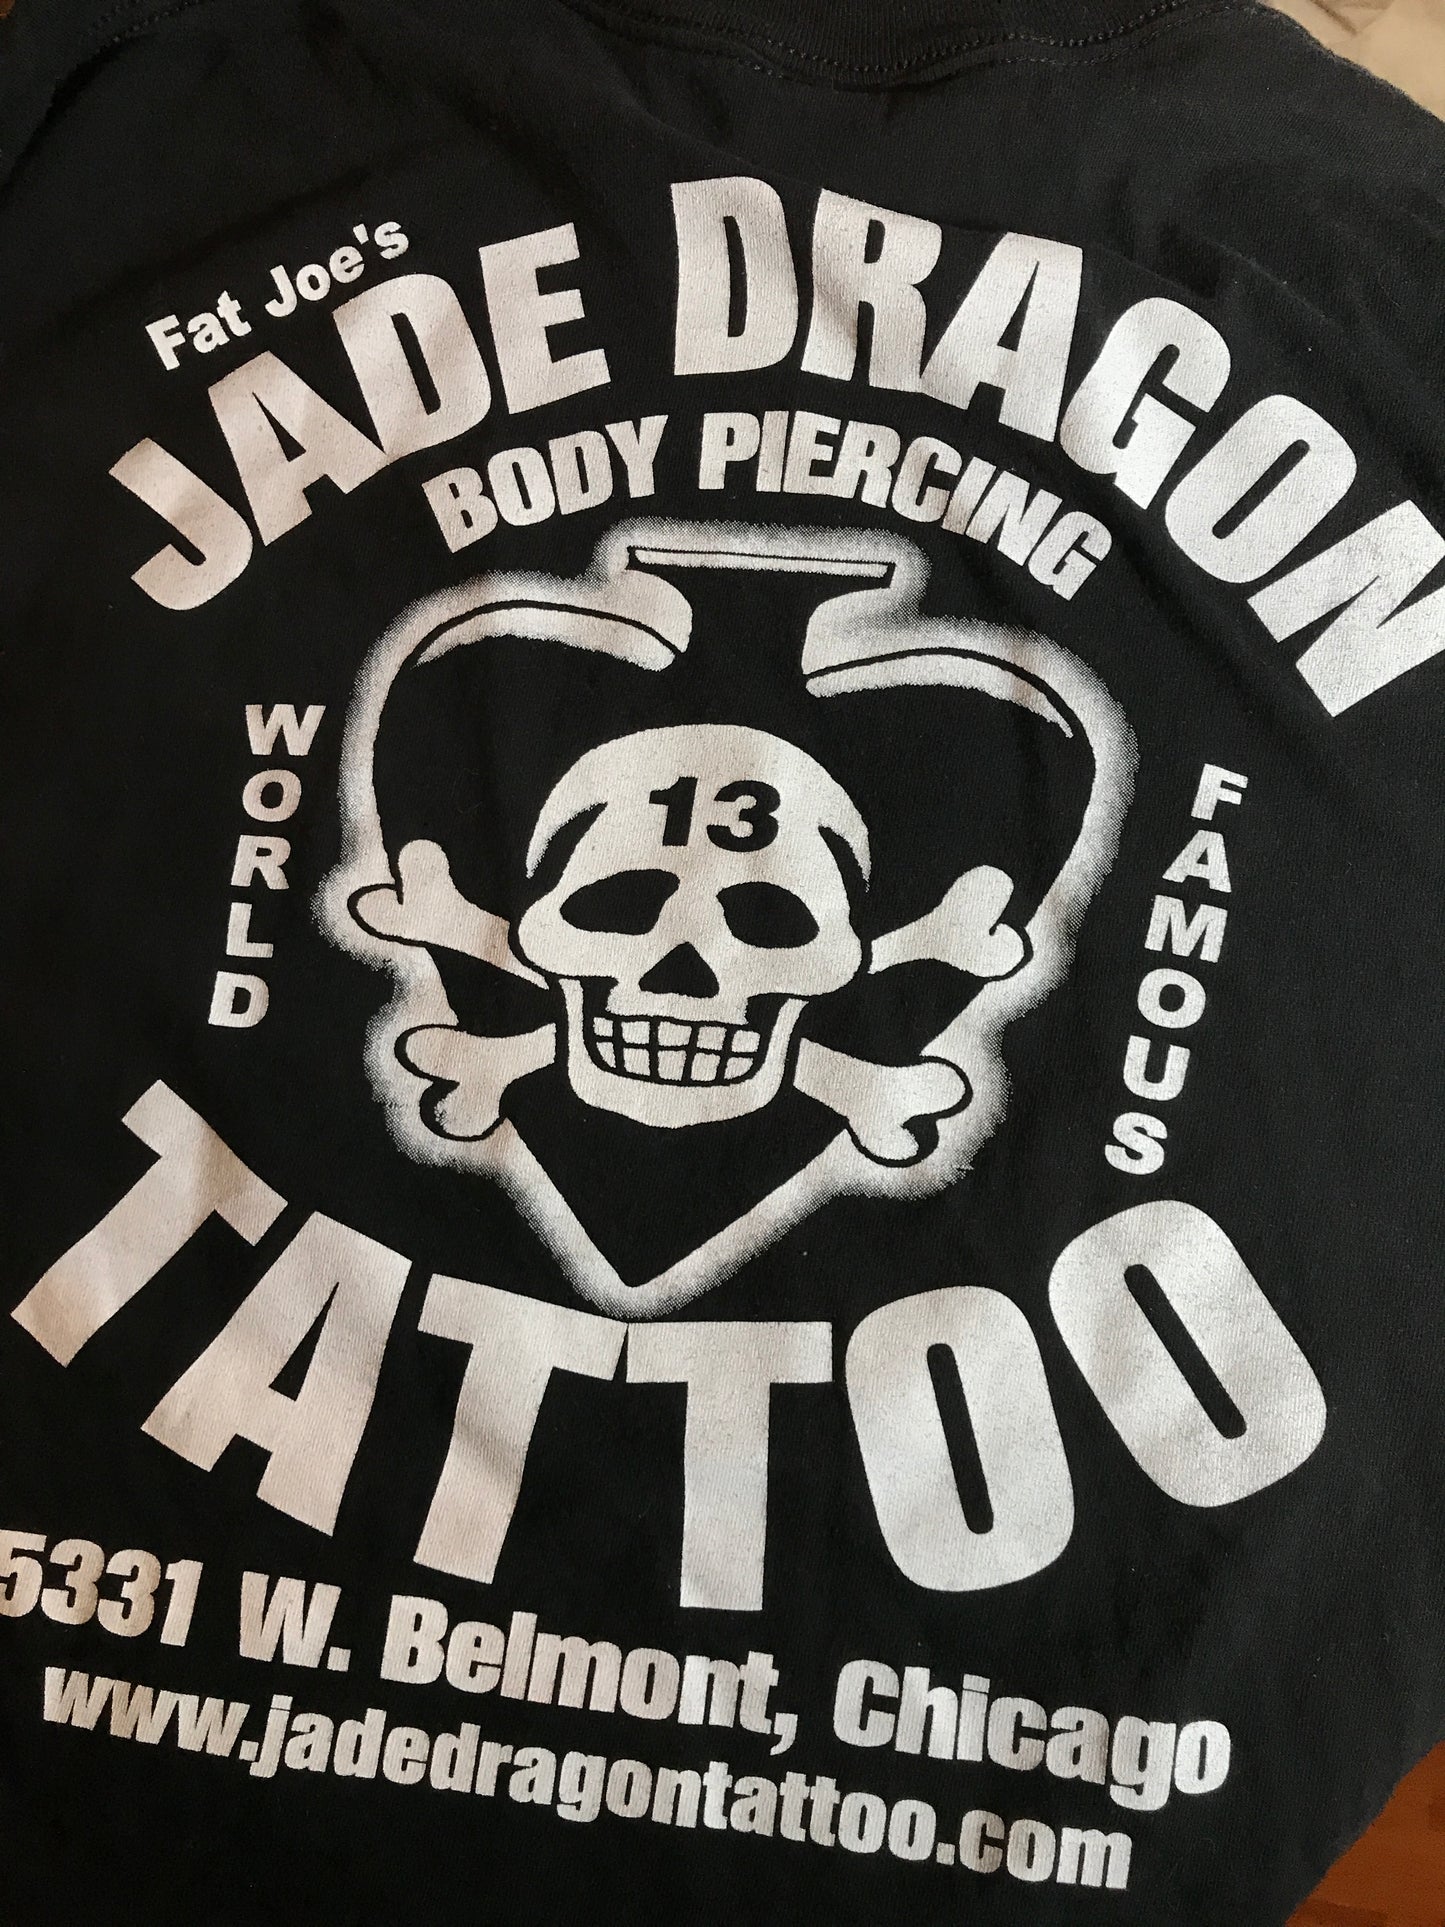 Playera Jade Dragon Tattoo Vintage